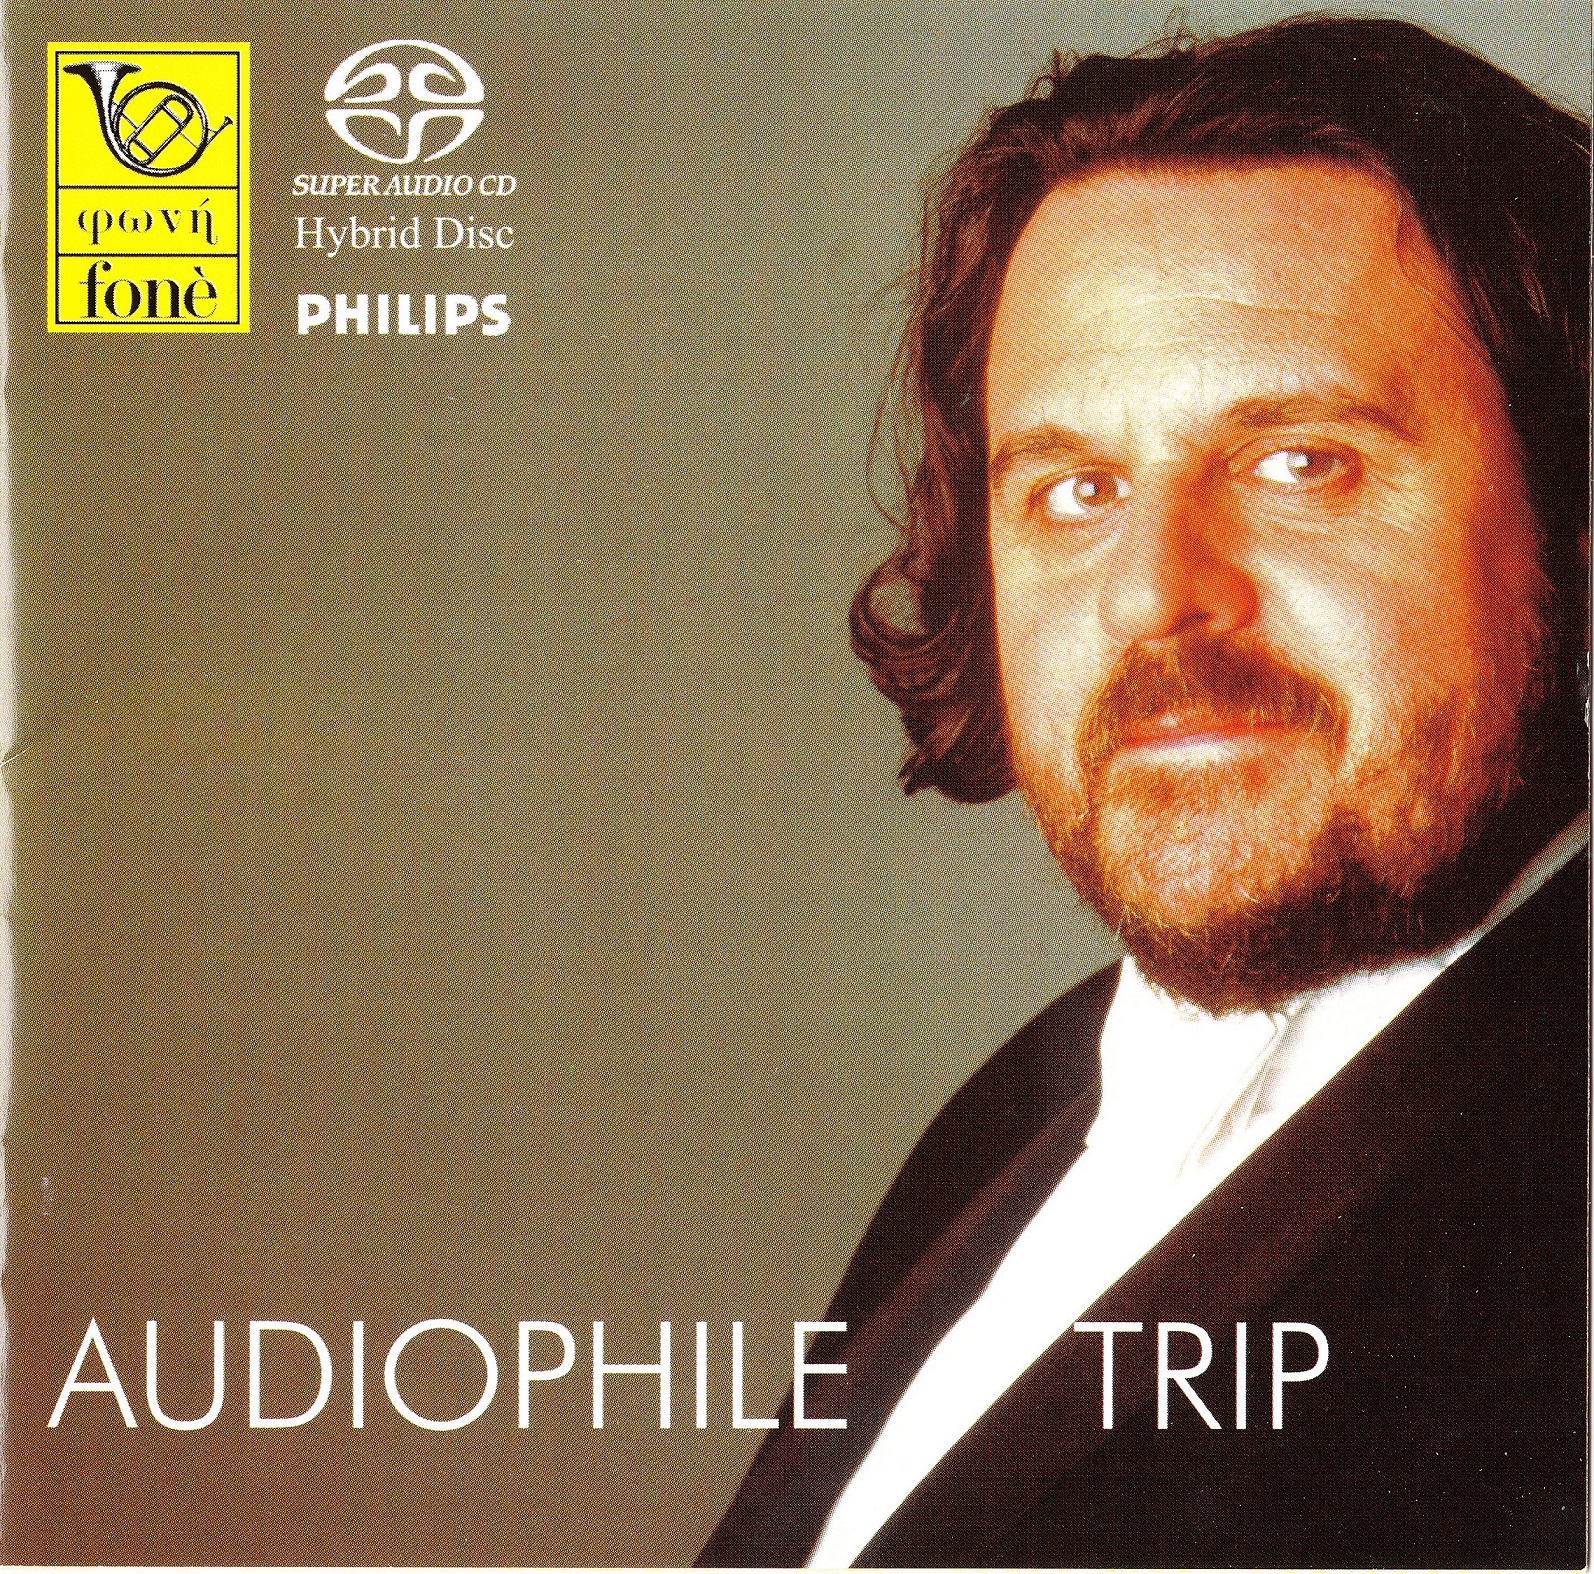 Various Artists - Audiophile Trip - Super Audio CD sampler (2001) SACD ISO